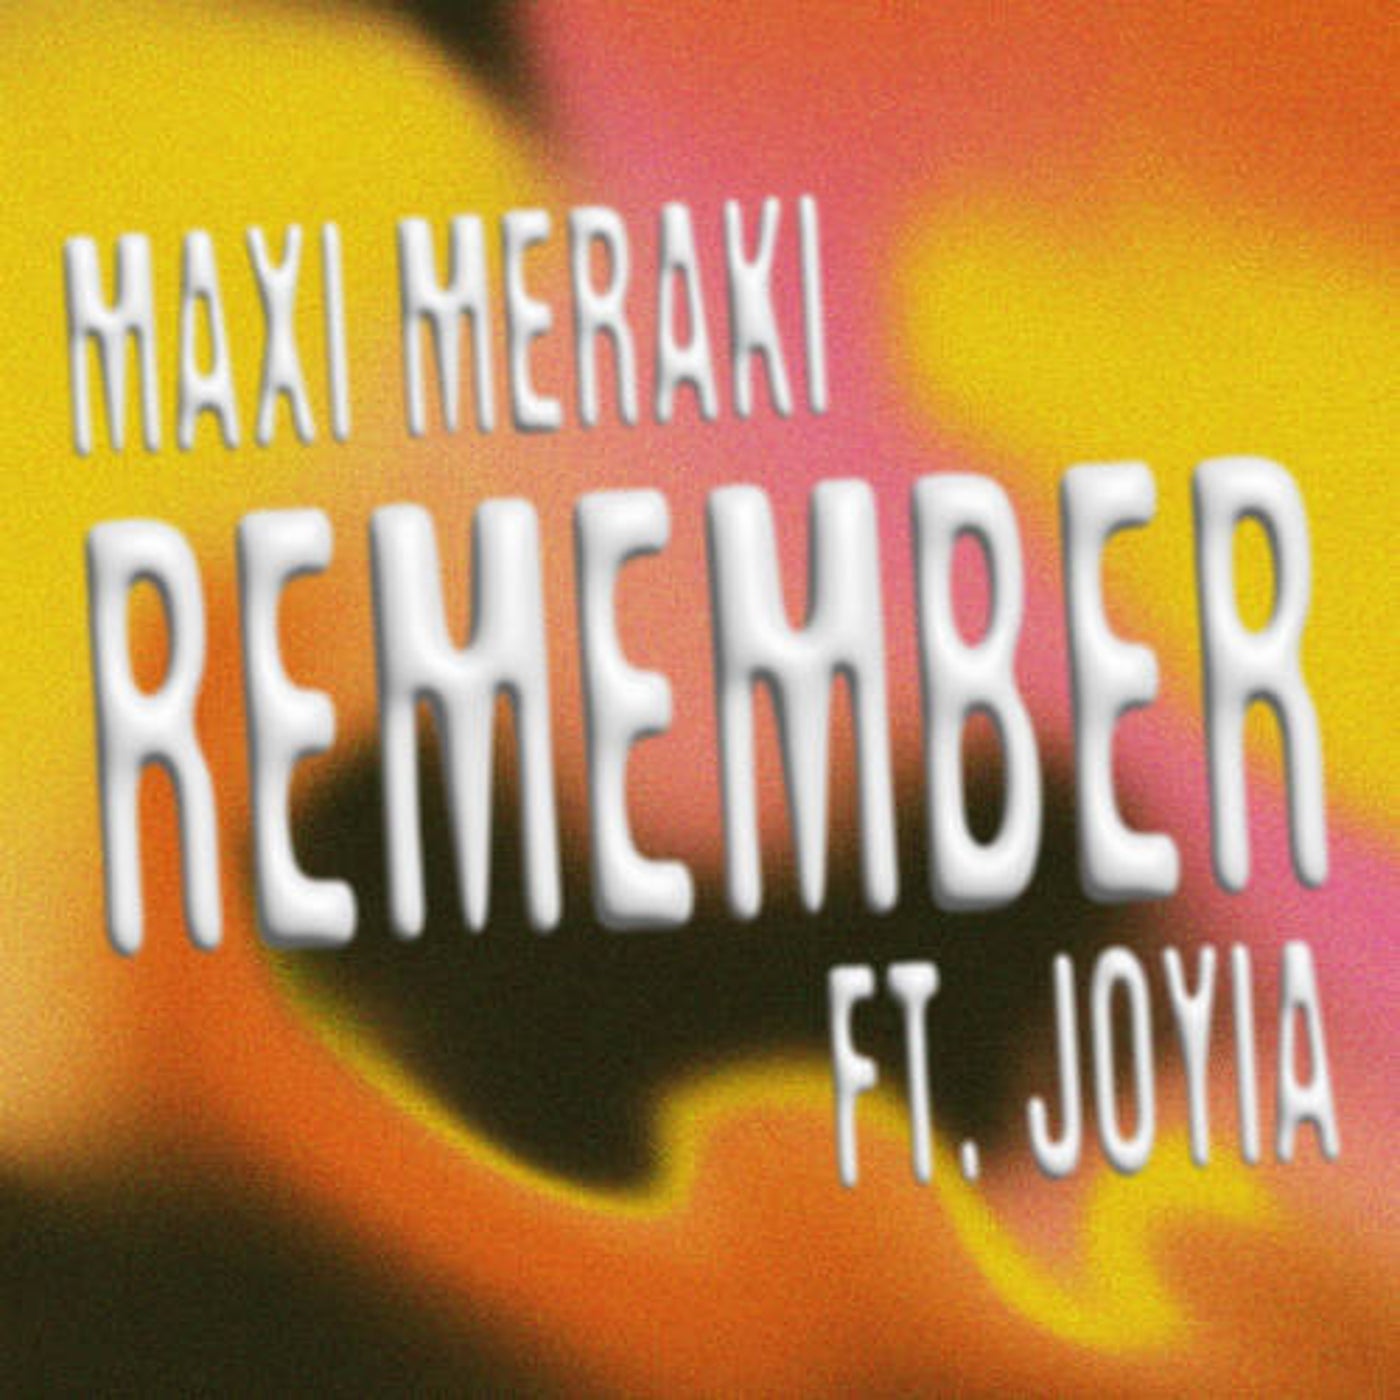 image cover: Joyia, MAXI MERAKI - Remember (Extended Mix) on Ultra